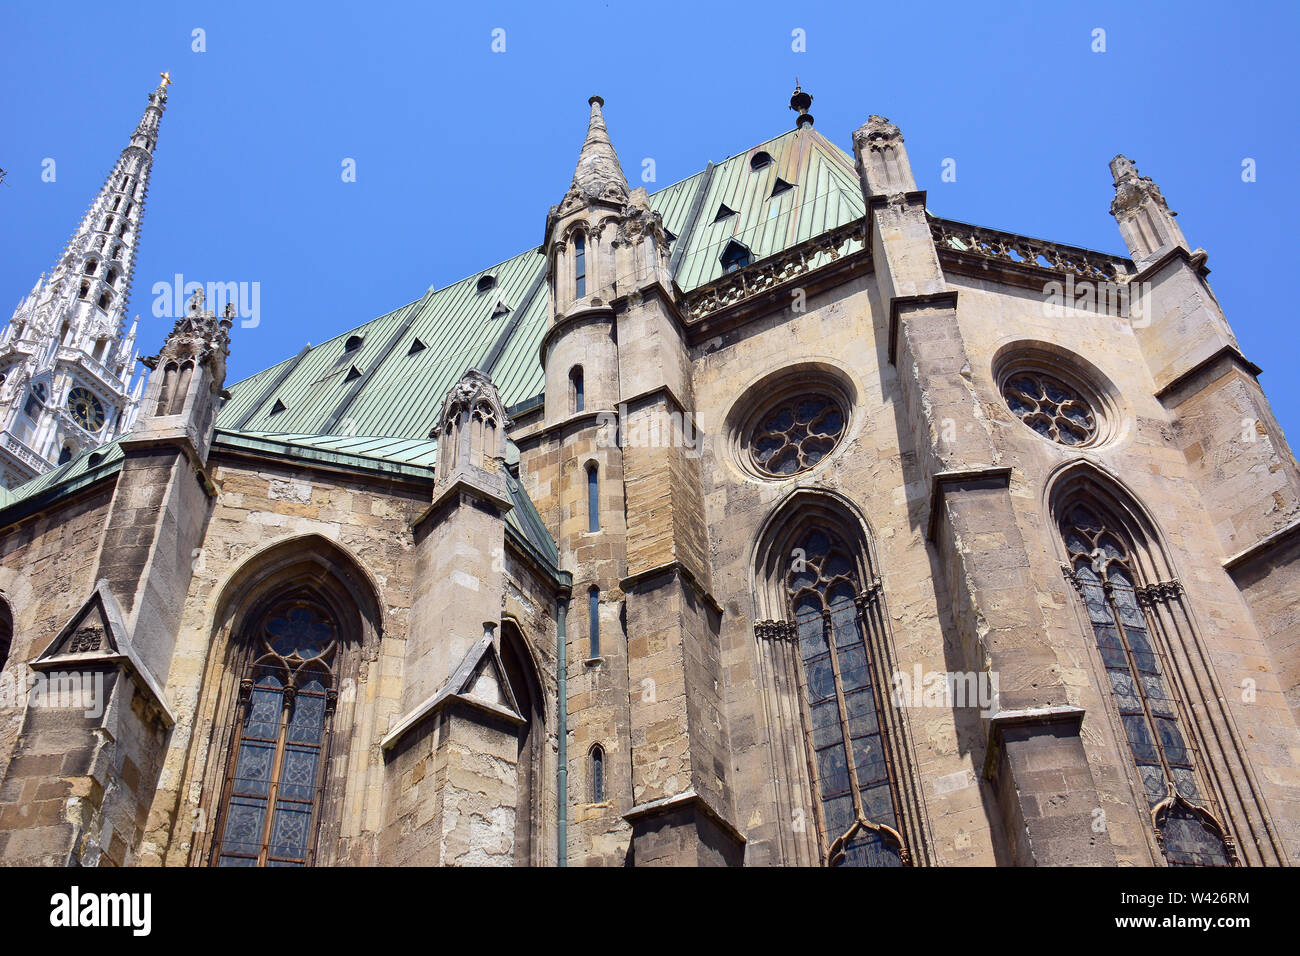 Kathedrale von Zagreb, die Kathedrale Uznesenja Blažene Djevice Marije ich svetih Stjepana ich Rudolf, Zagreb, Kroatien, Europa Stockfoto